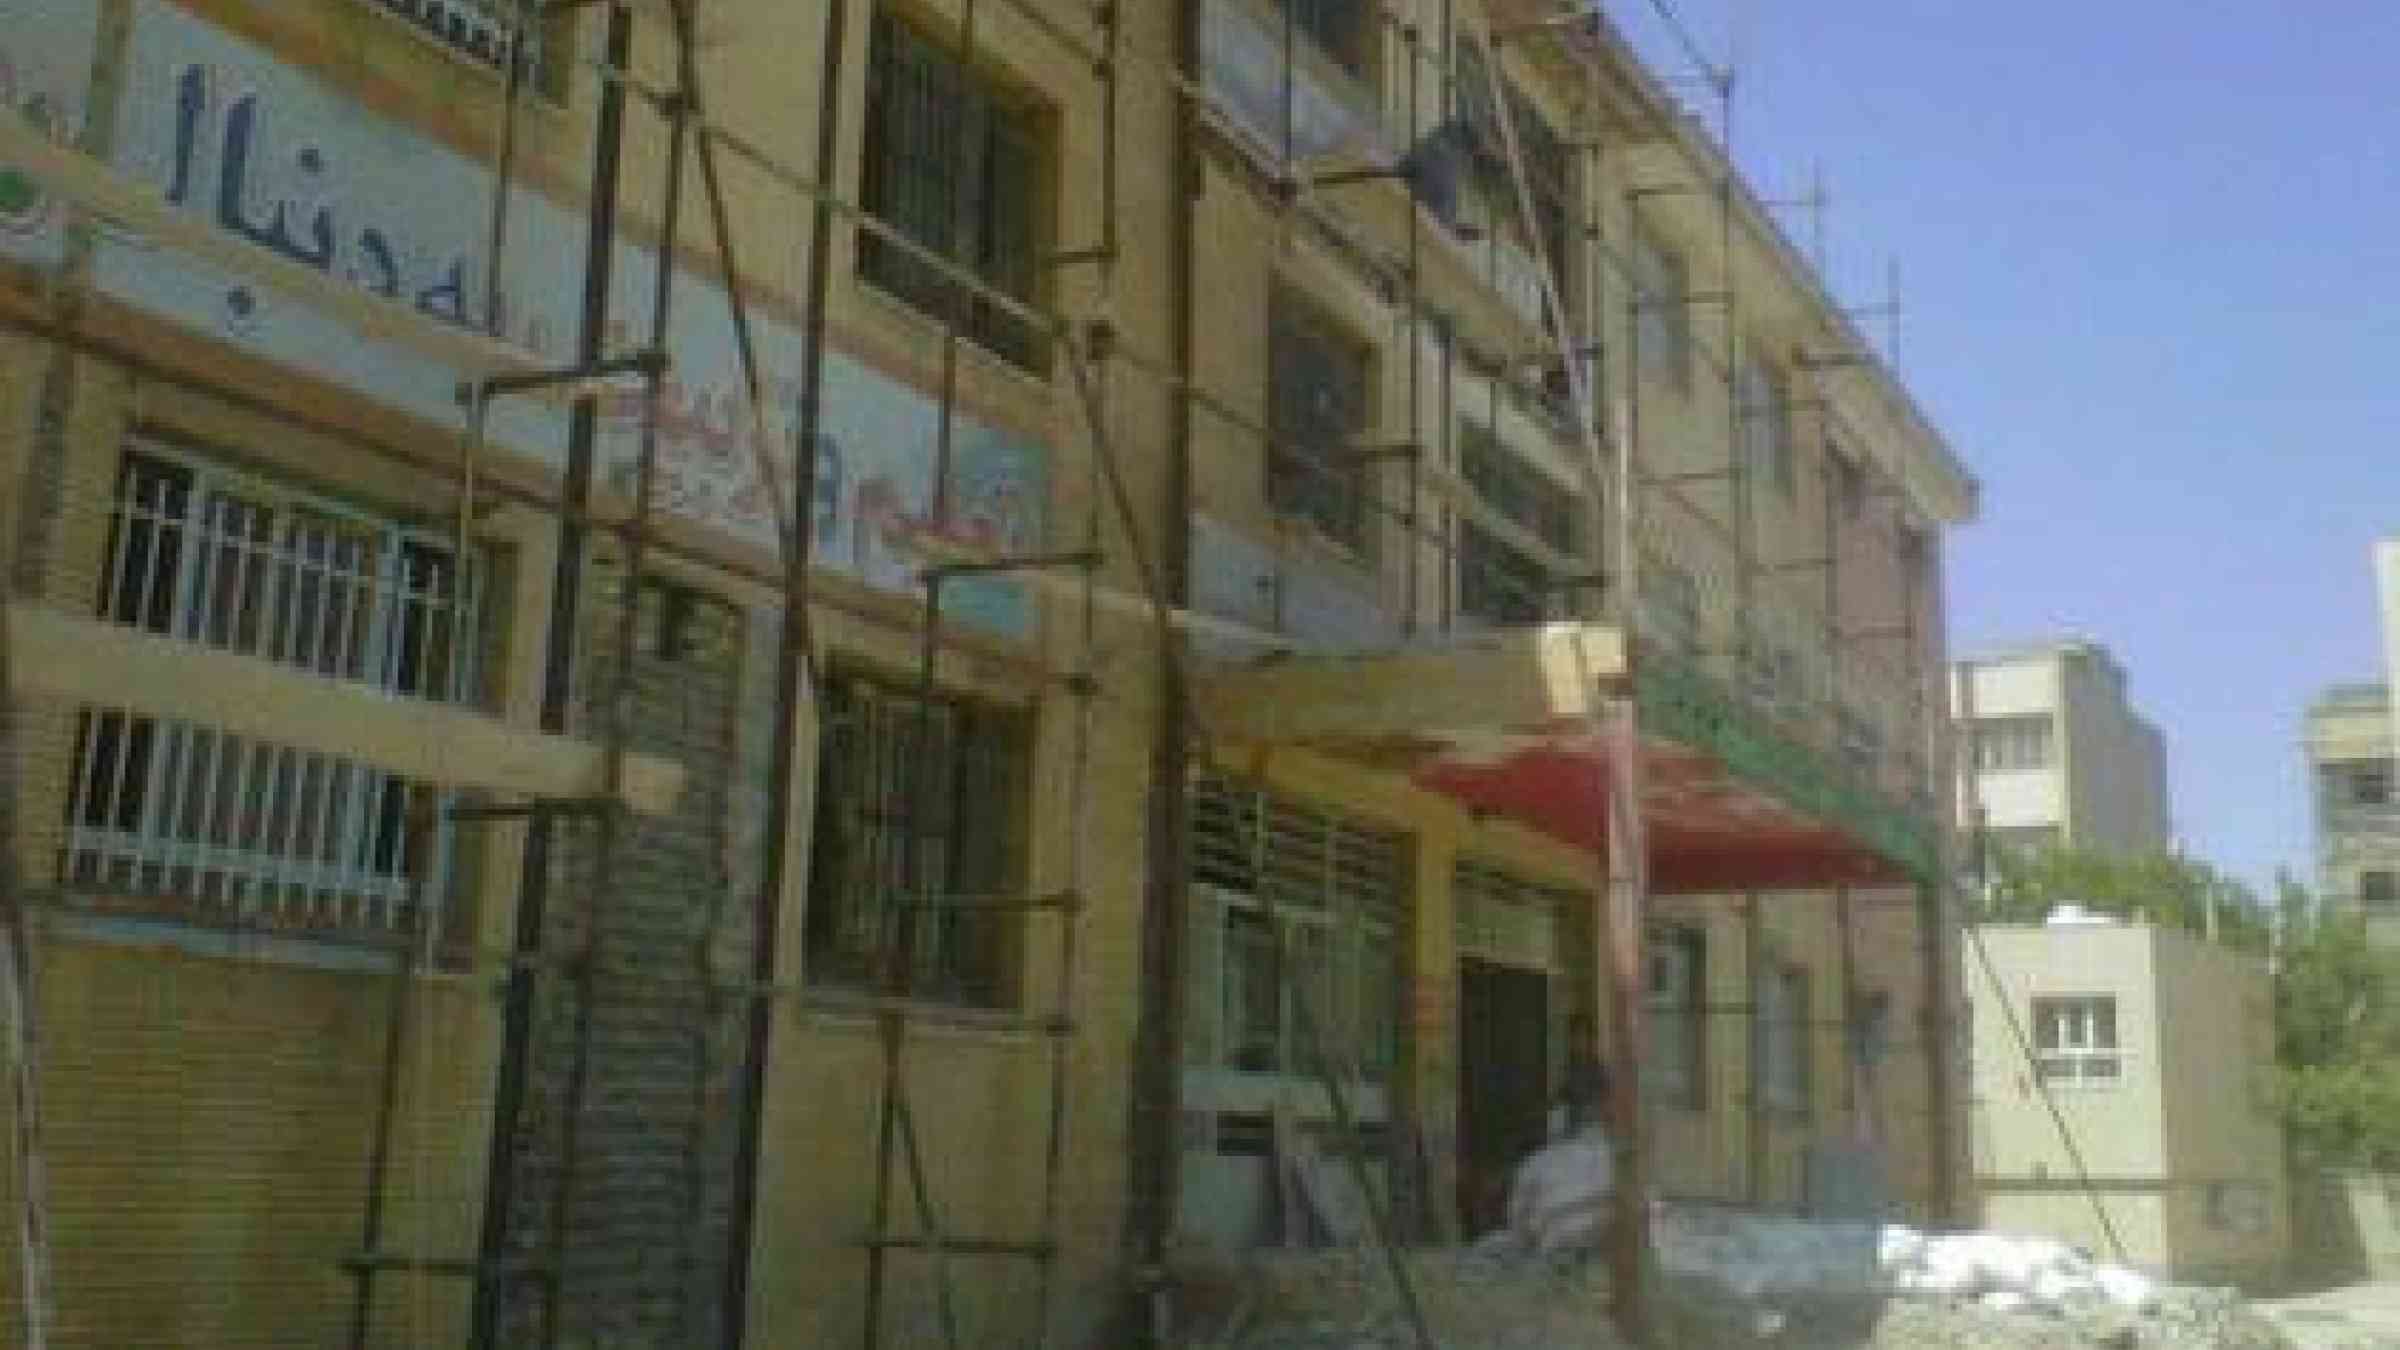 Iran has designated $4 billion to building earthquake-proof schools and retrofitting.